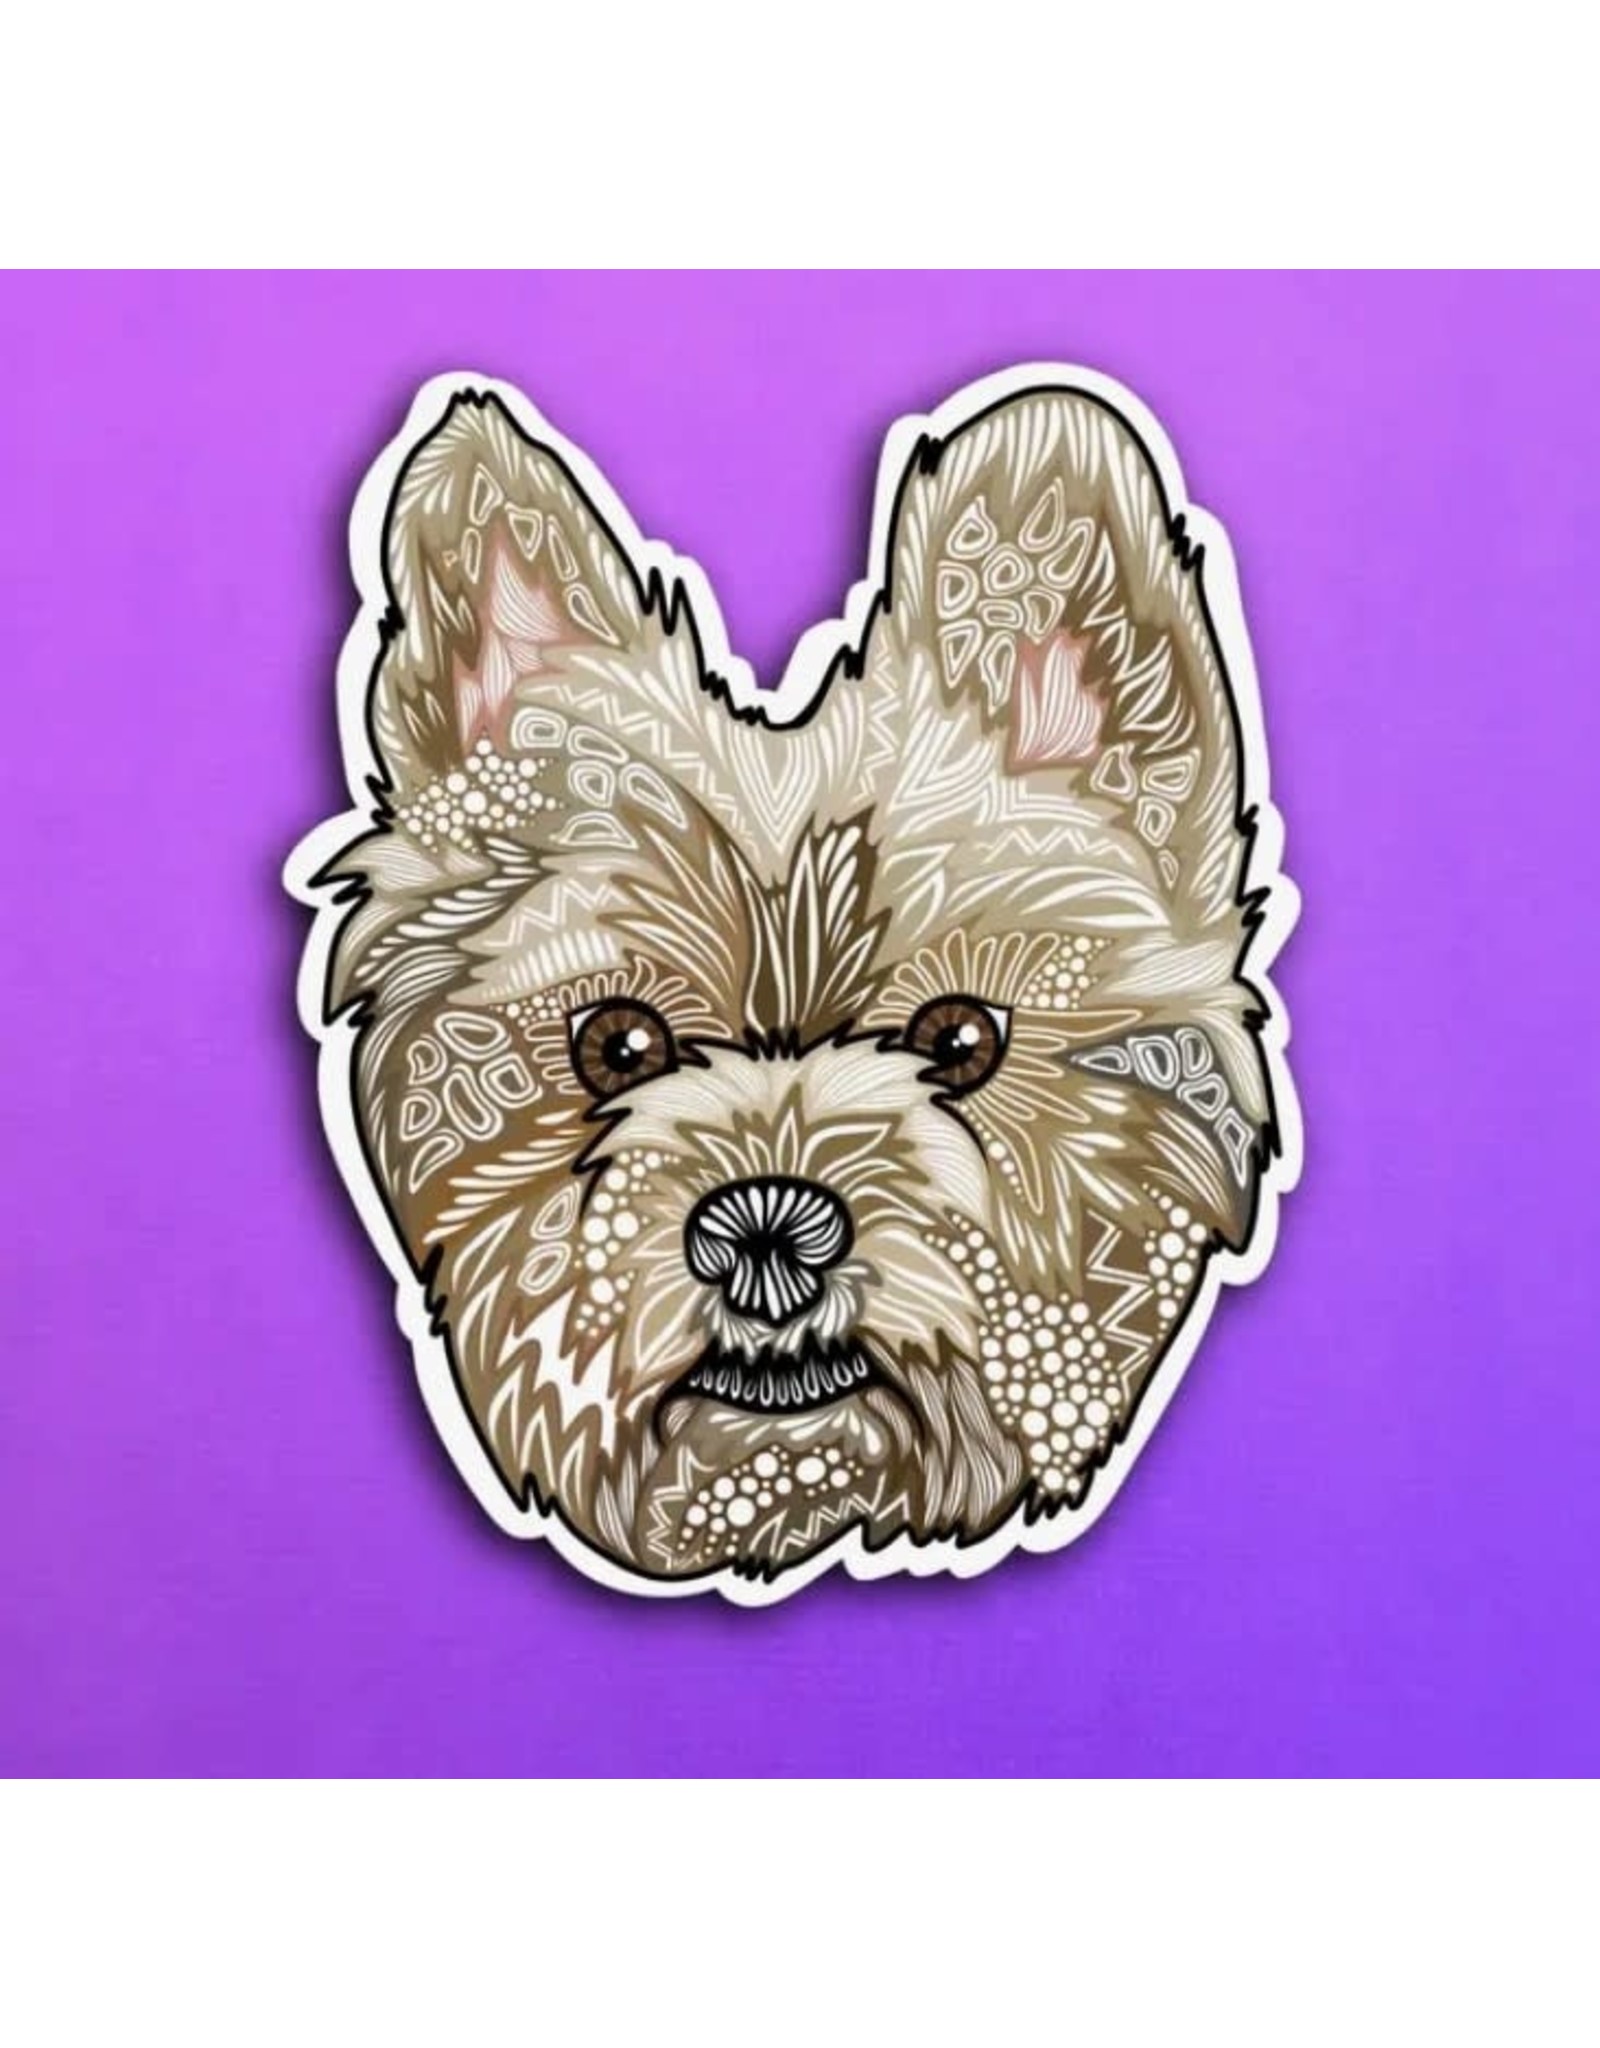 Ryllie the Dog Vinyl Sticker